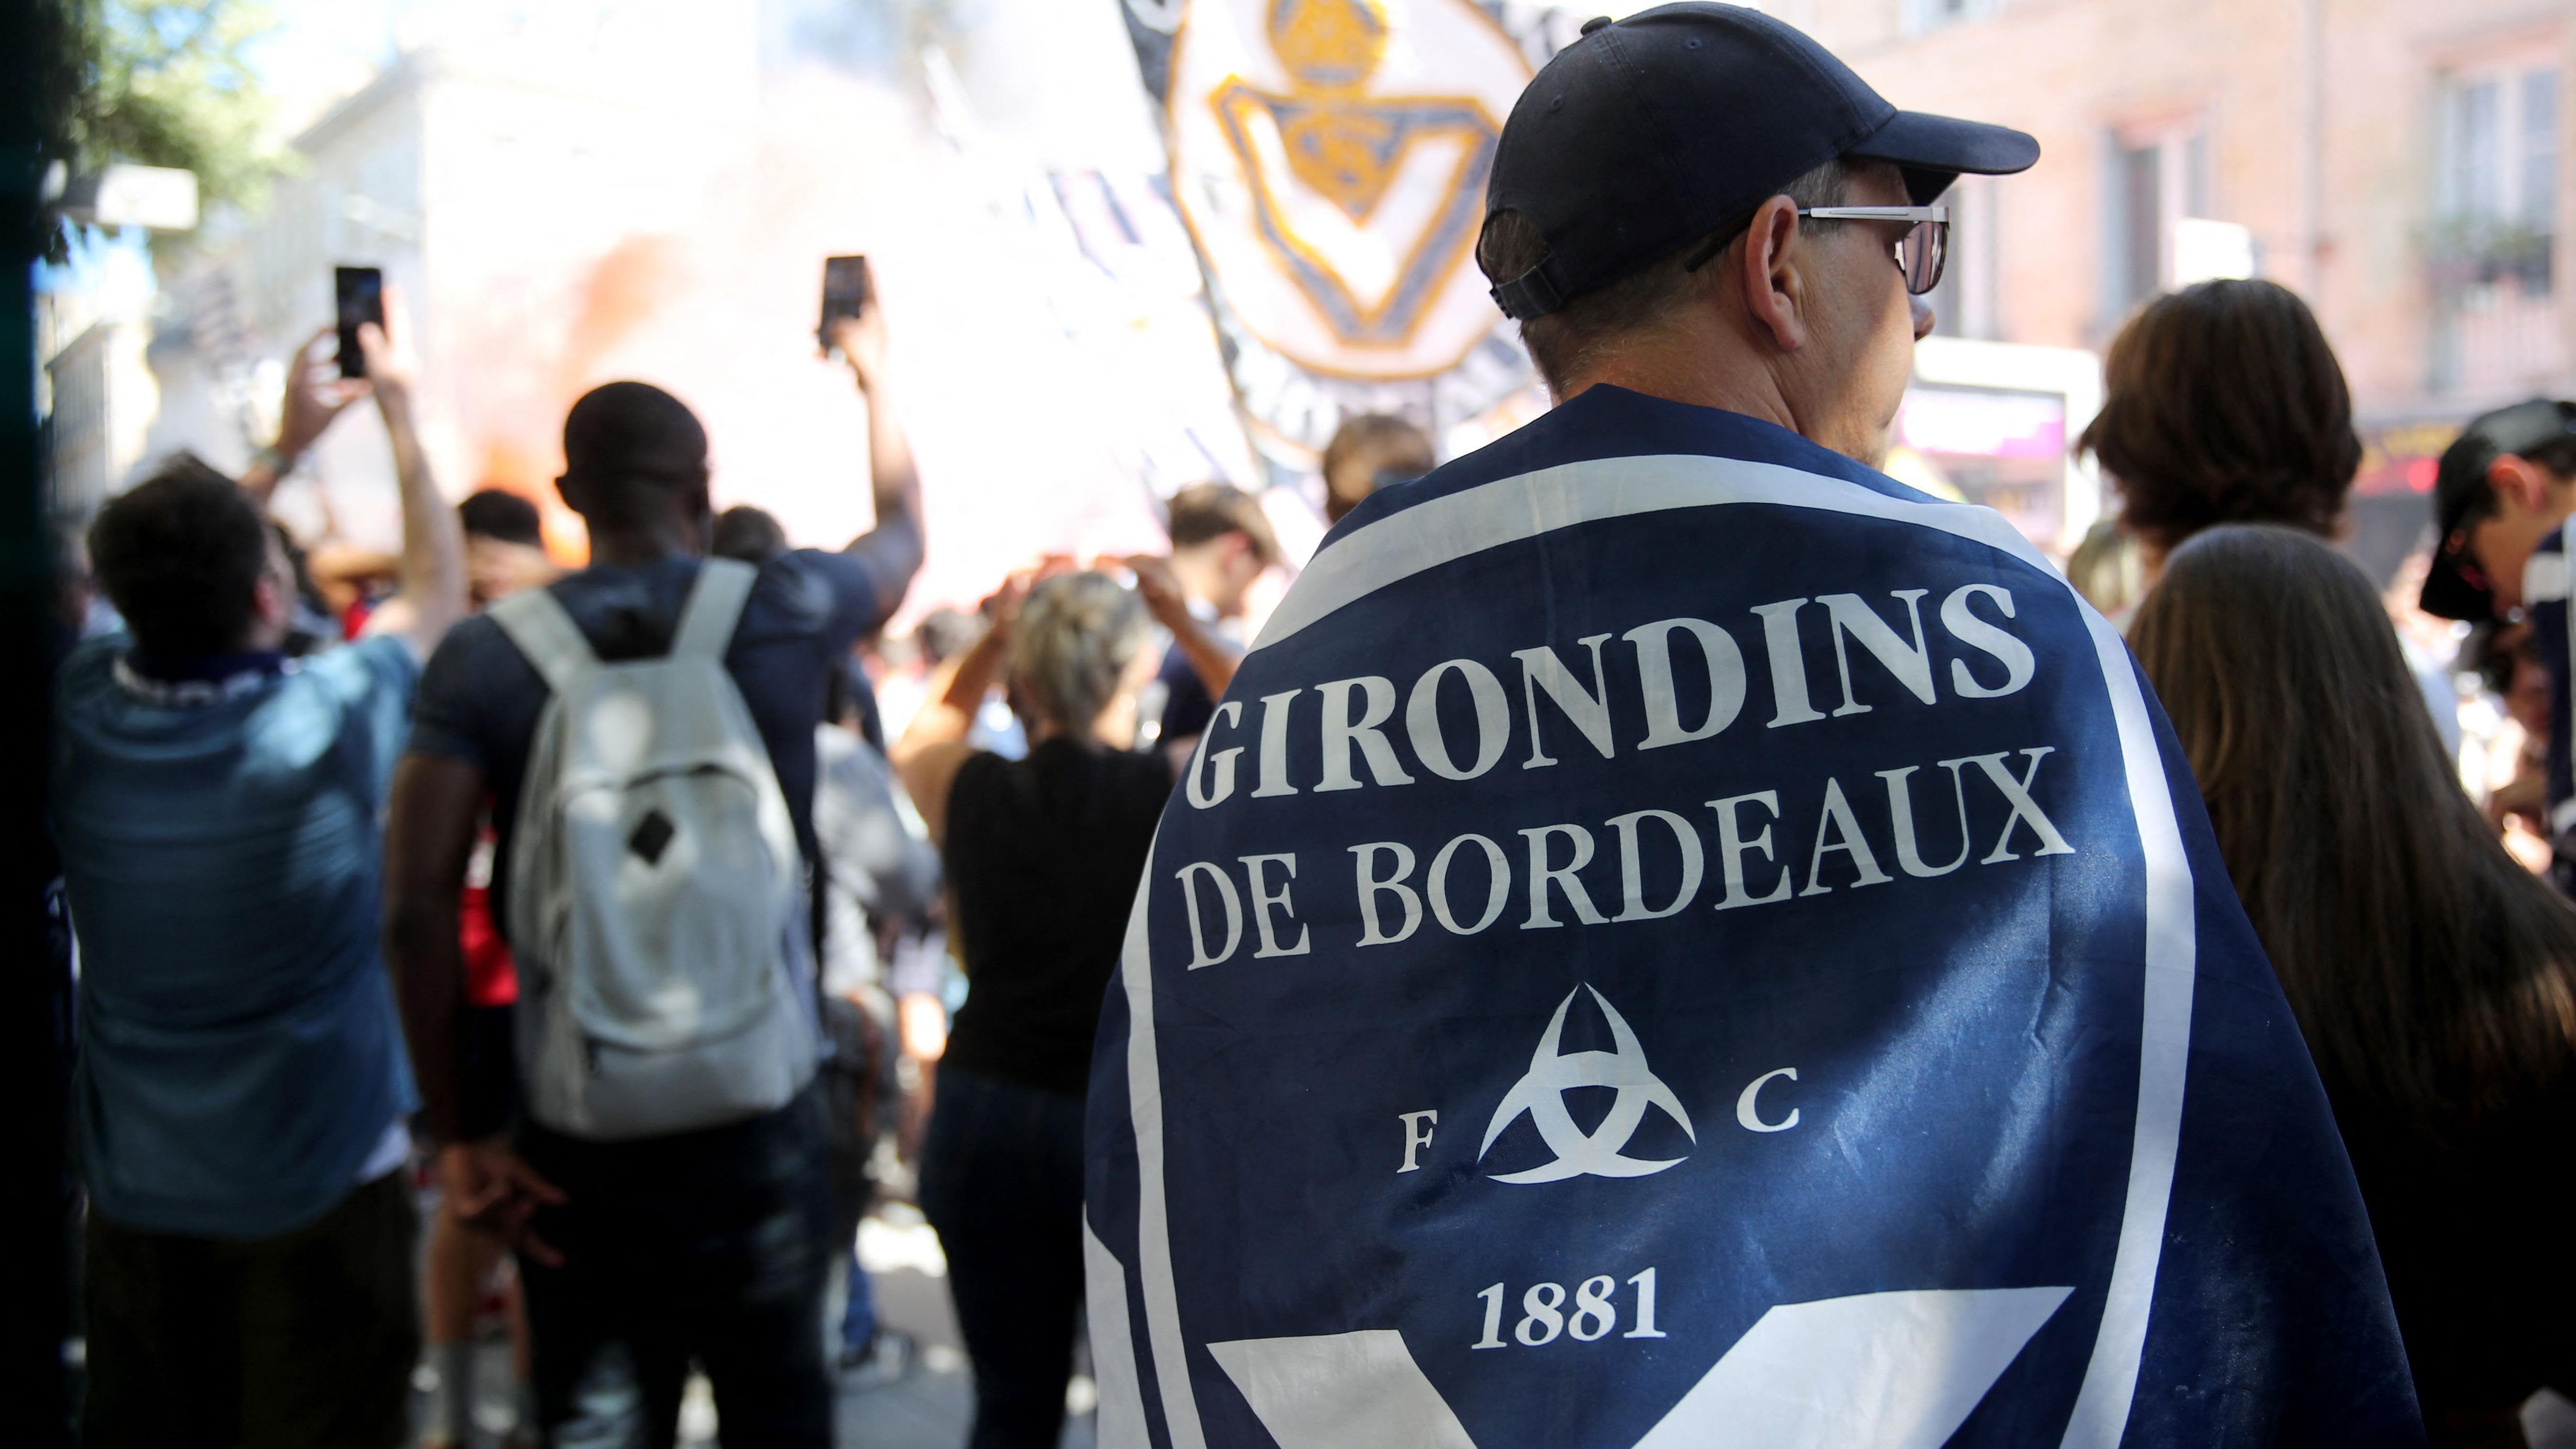 Bordeaux file for bankruptcy after FSG end takeover talks